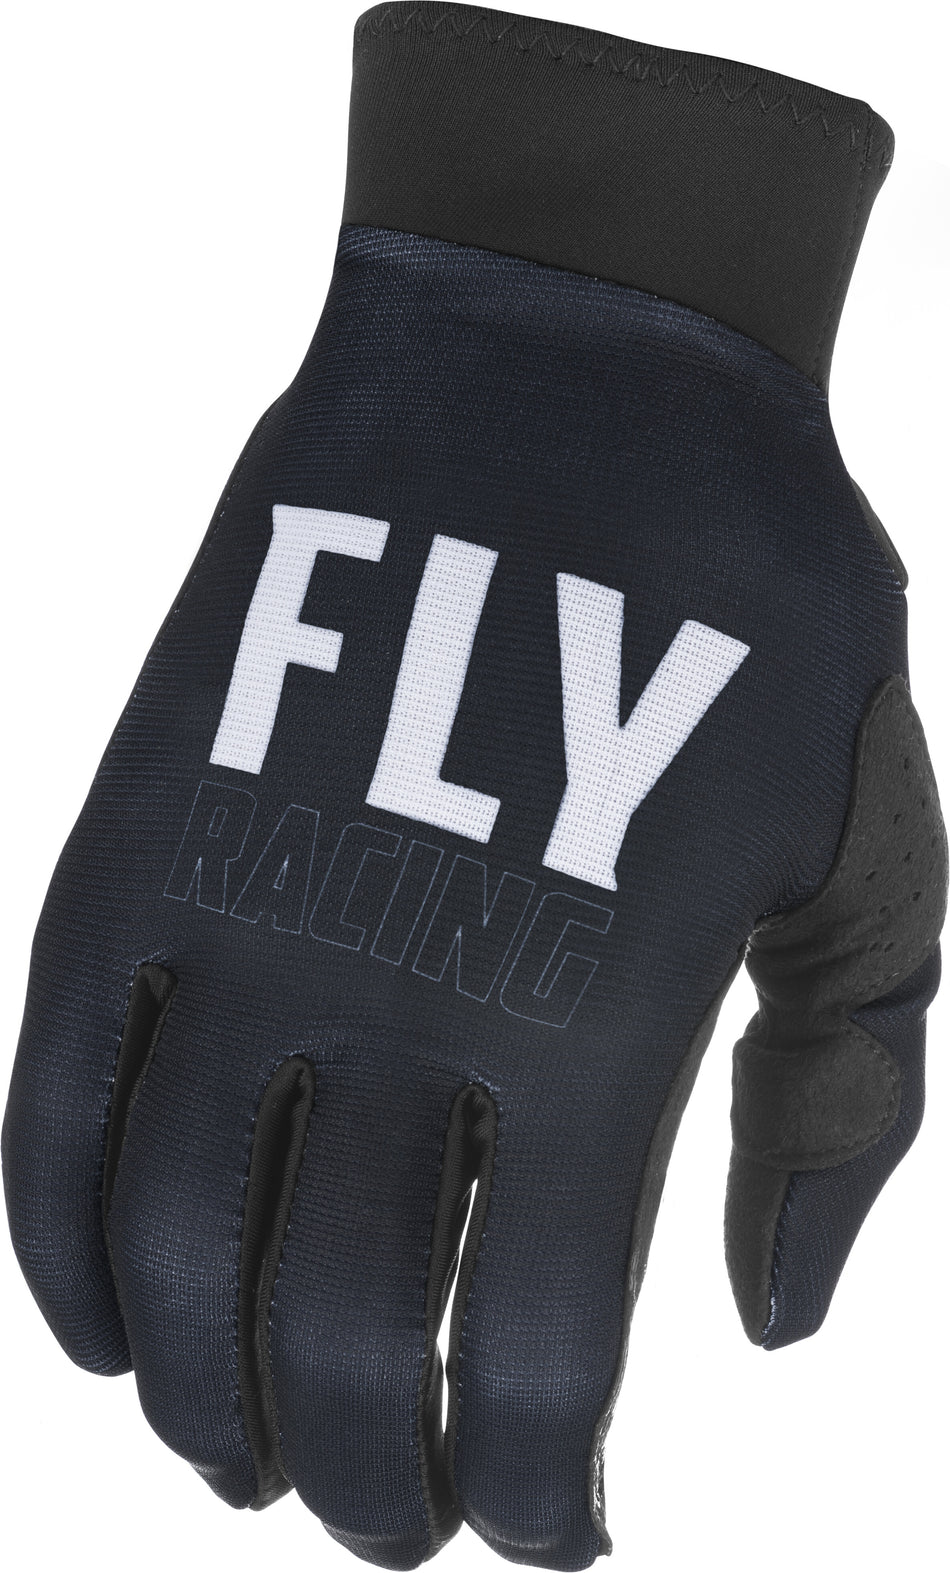 FLY RACING Pro Lite Gloves Black/White Sz 07 374-85007